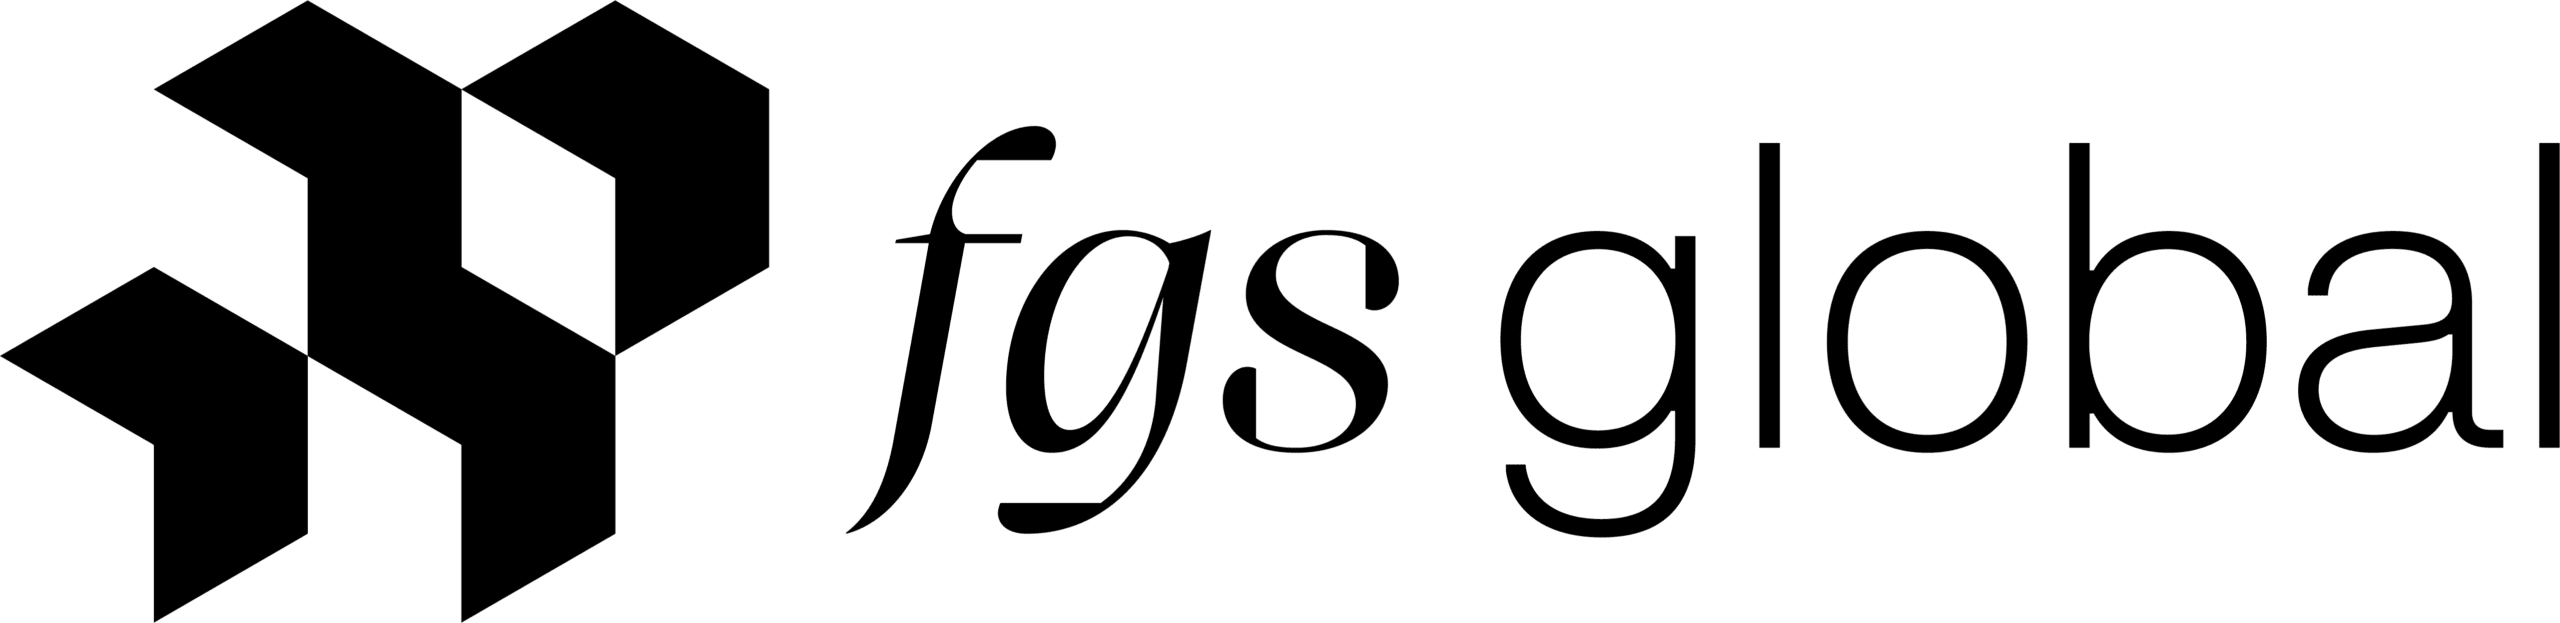 FGS Global logo